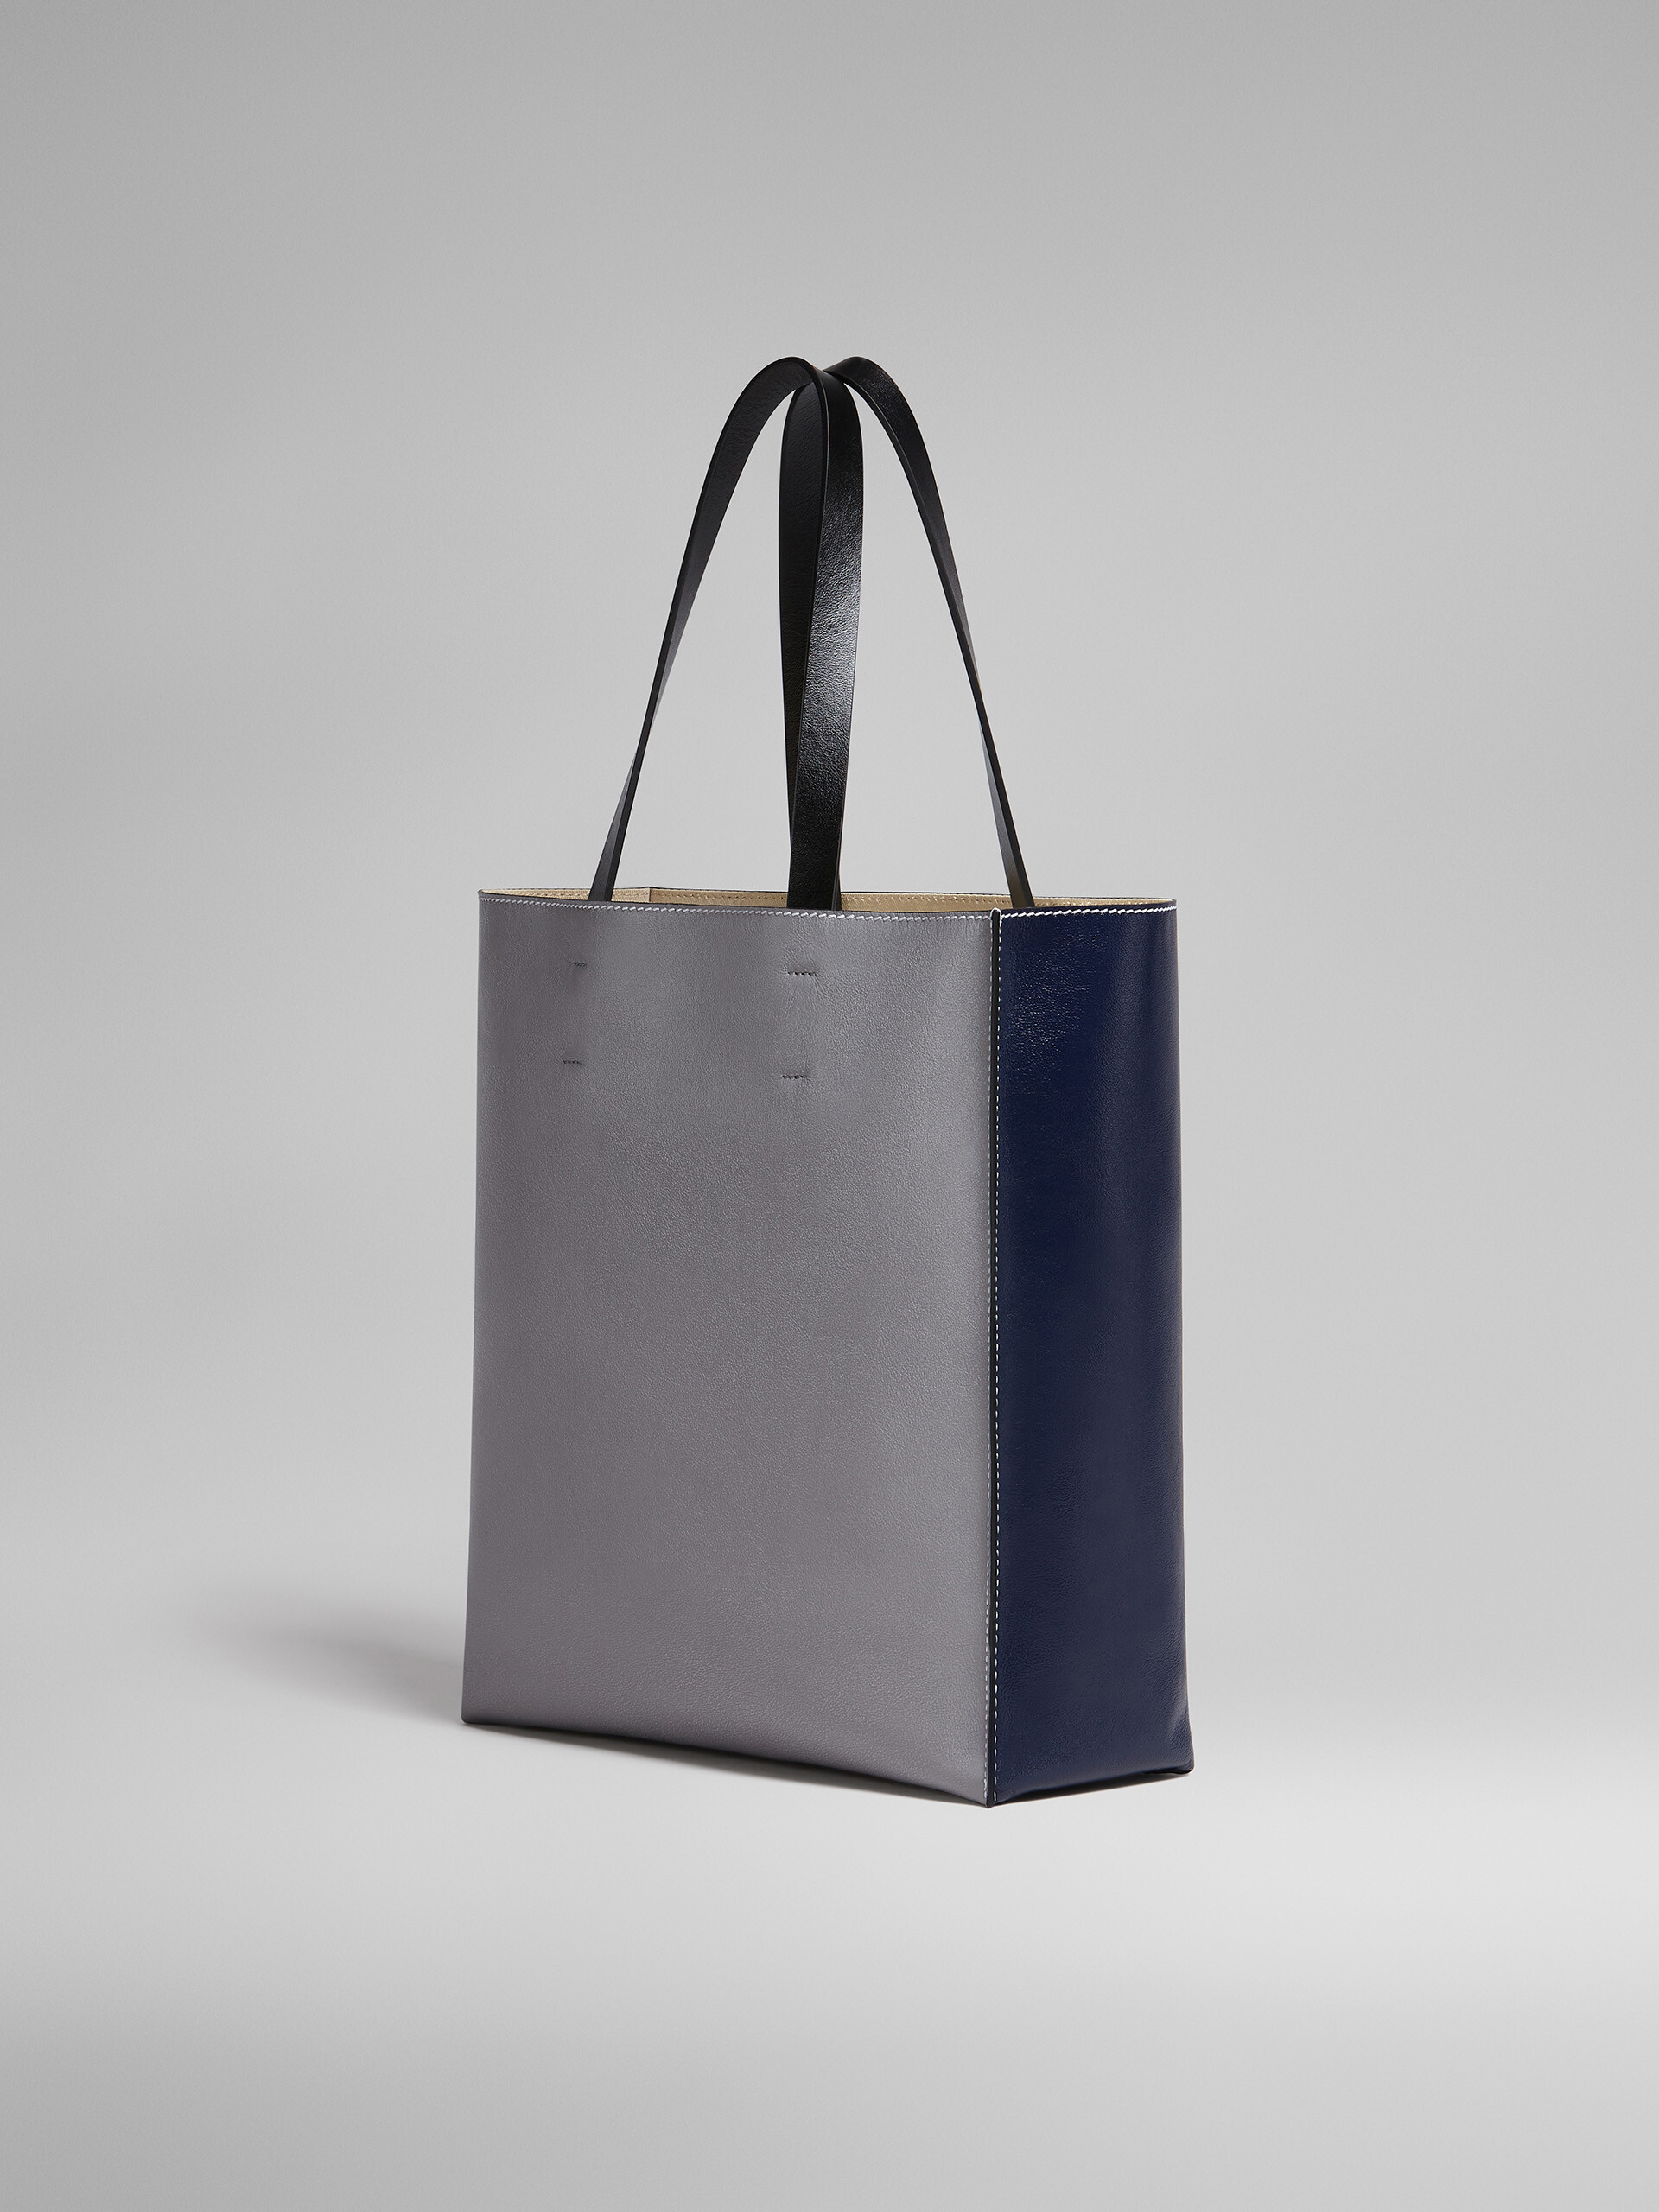 Grand sac MUSEO SOFT en cuir blanc - Sacs cabas - Image 3